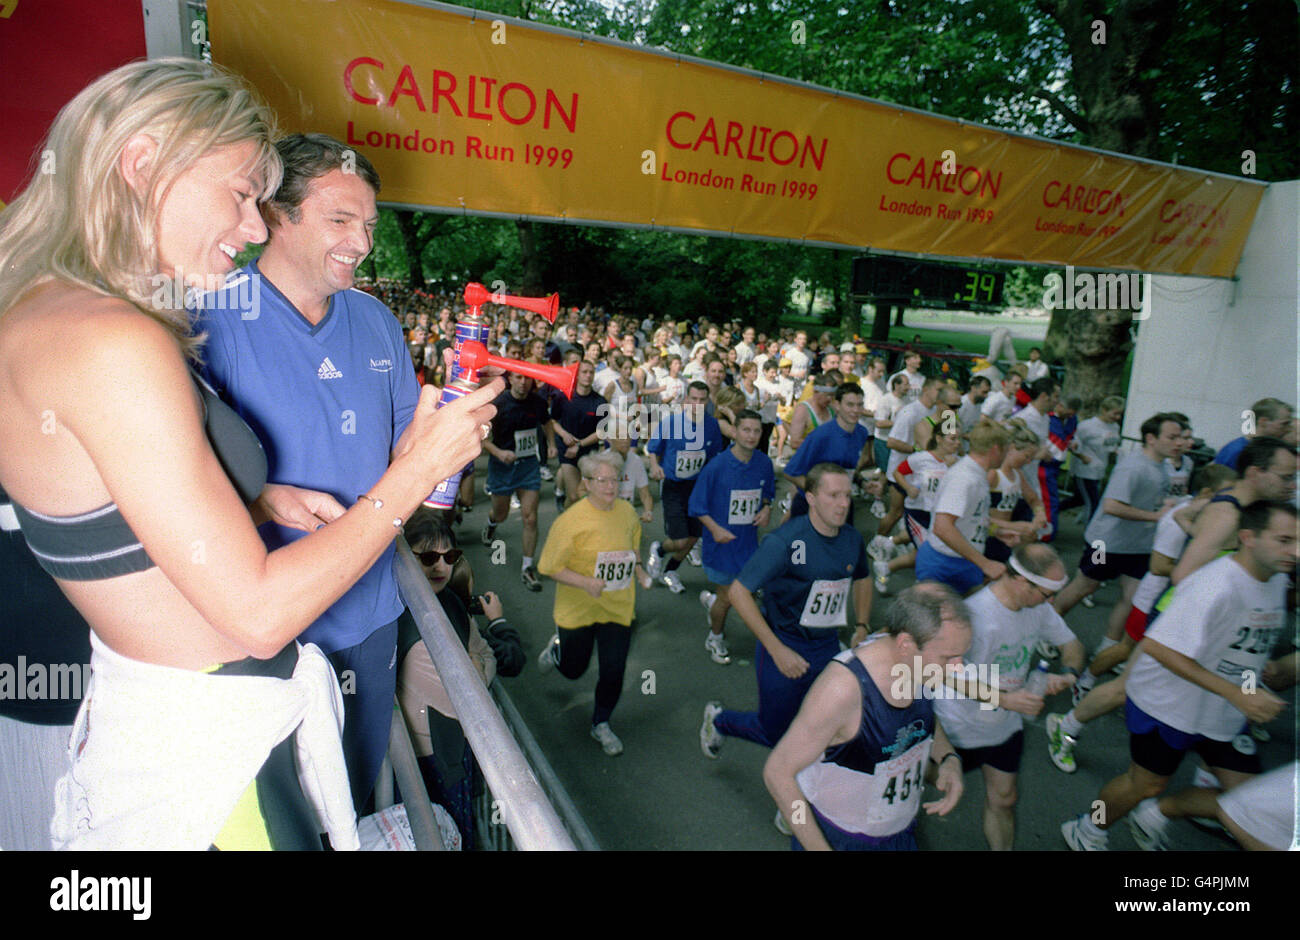 Former British Olympic swimmer Sharron Davies, and former Tottenham Hotspur football player Gary Mabbutt start the Carlton London Run 1999 in London's Battersea Park. Stock Photo